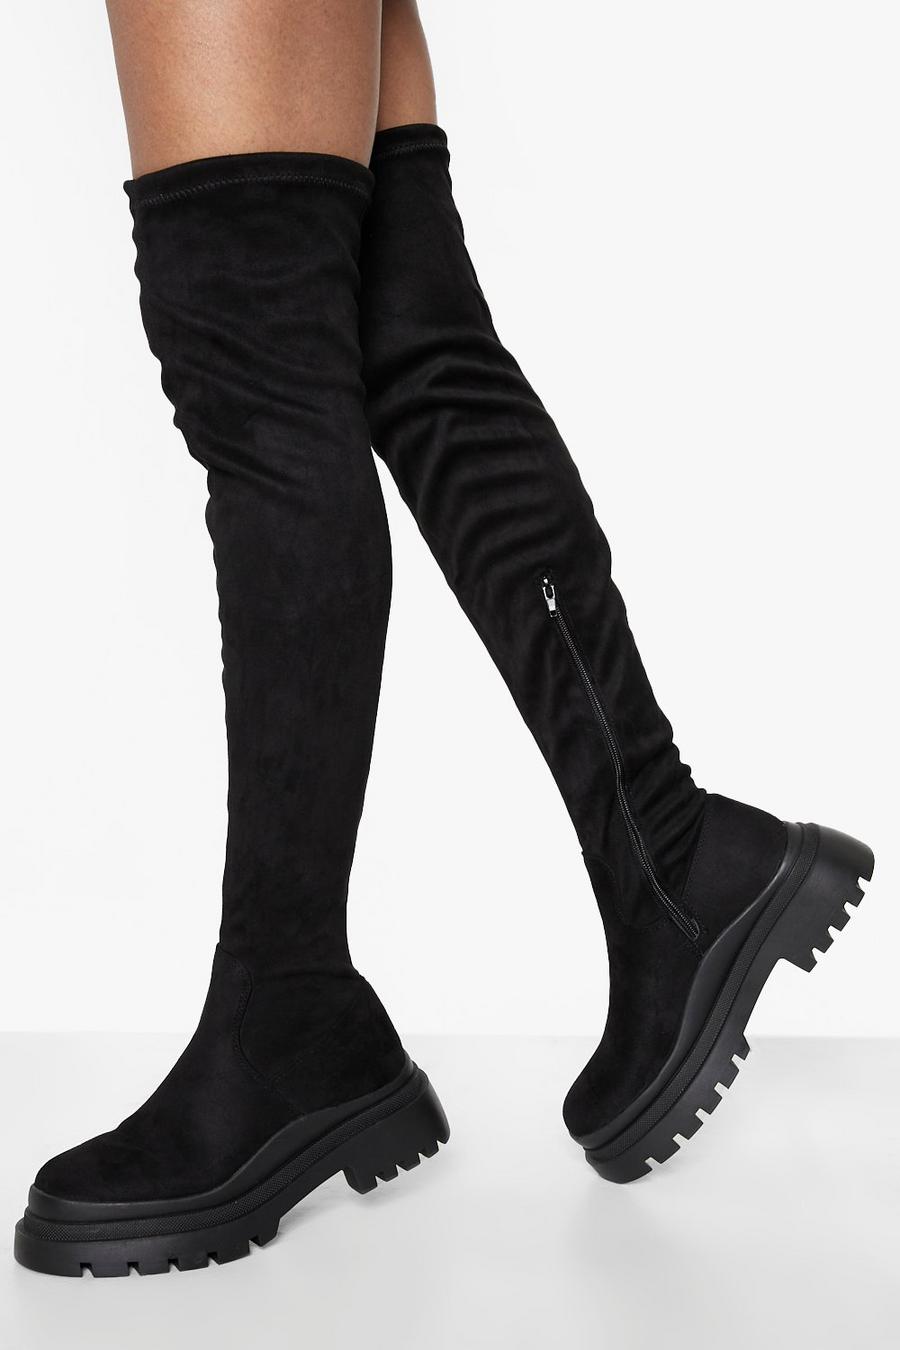 Overknee-Stiefel mit wellenförmiger Sohle, Schwarz noir